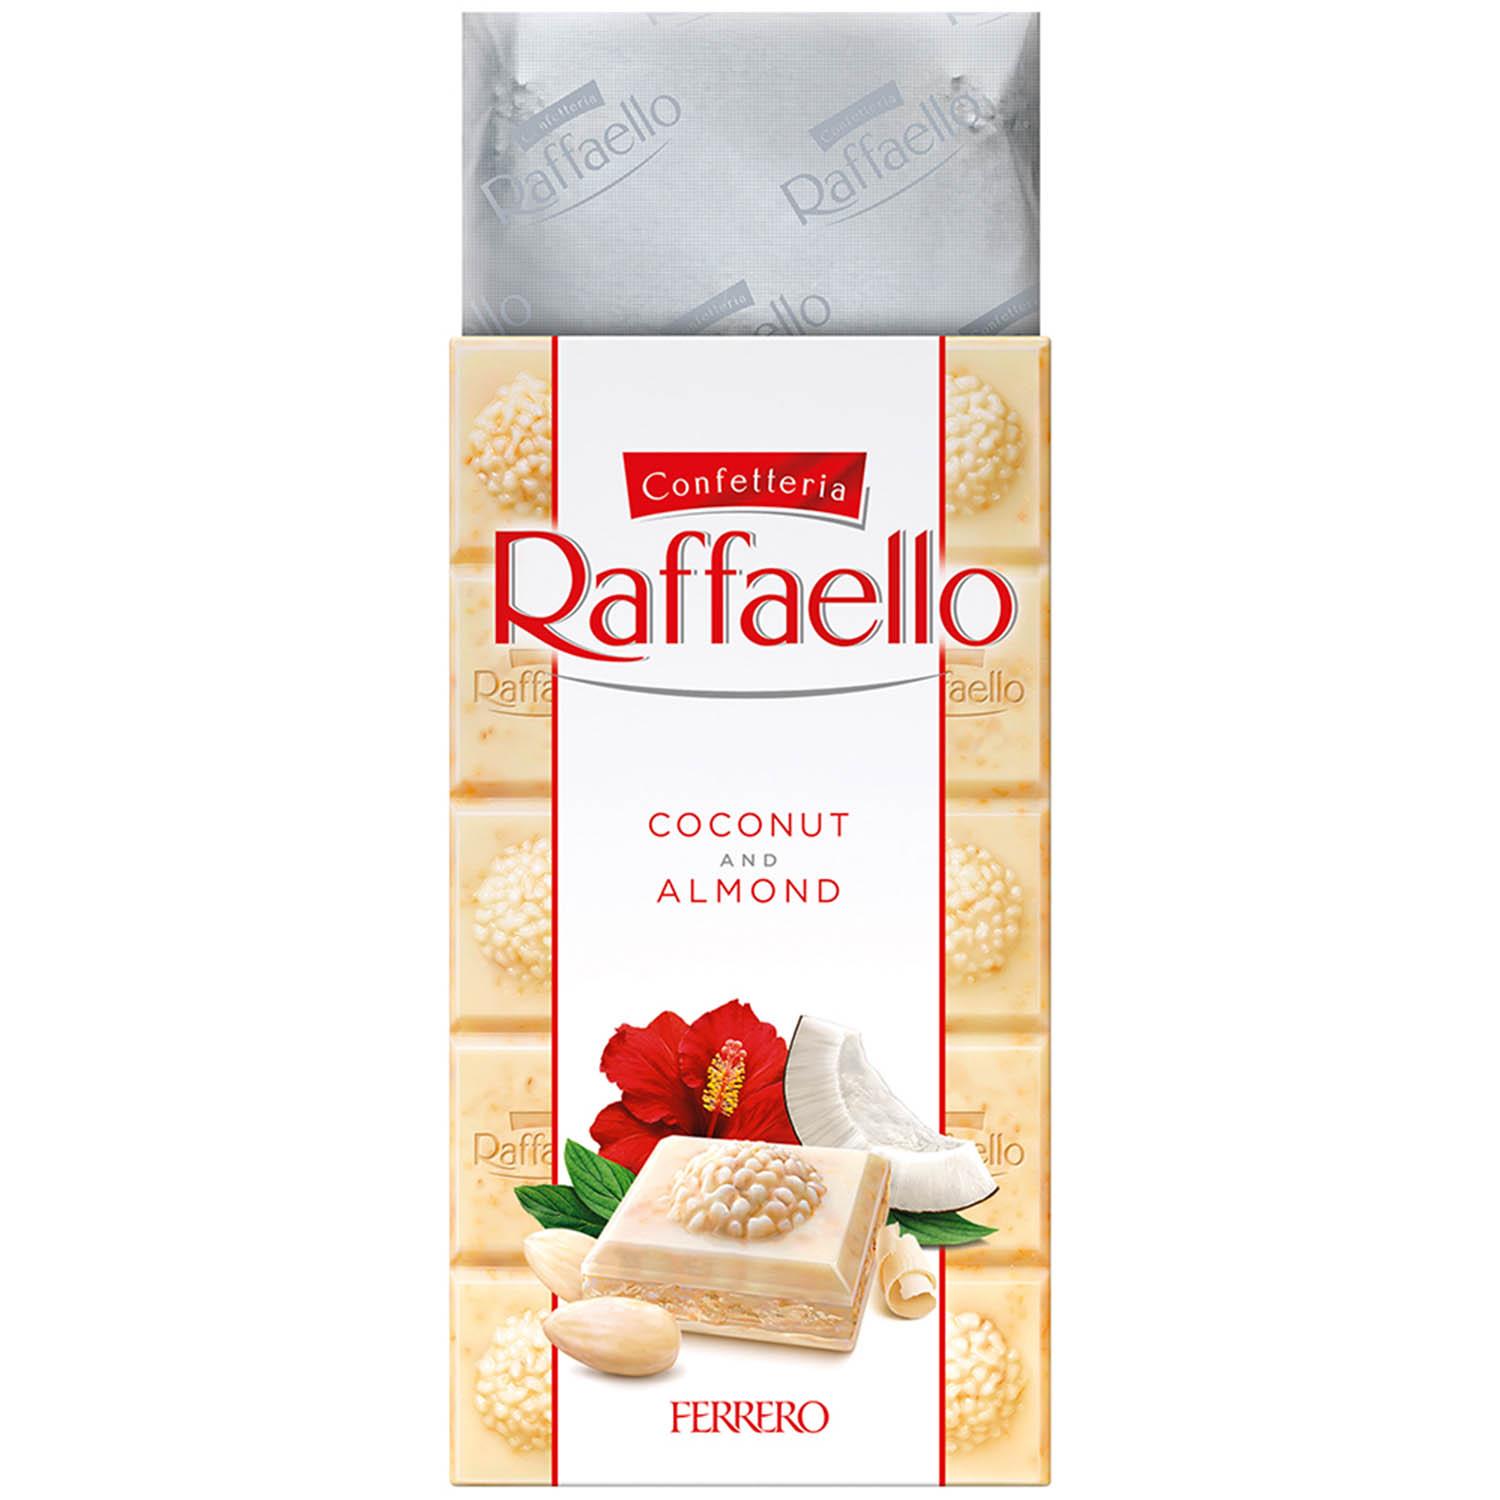 raffaello-tafel-90g-no2-1027